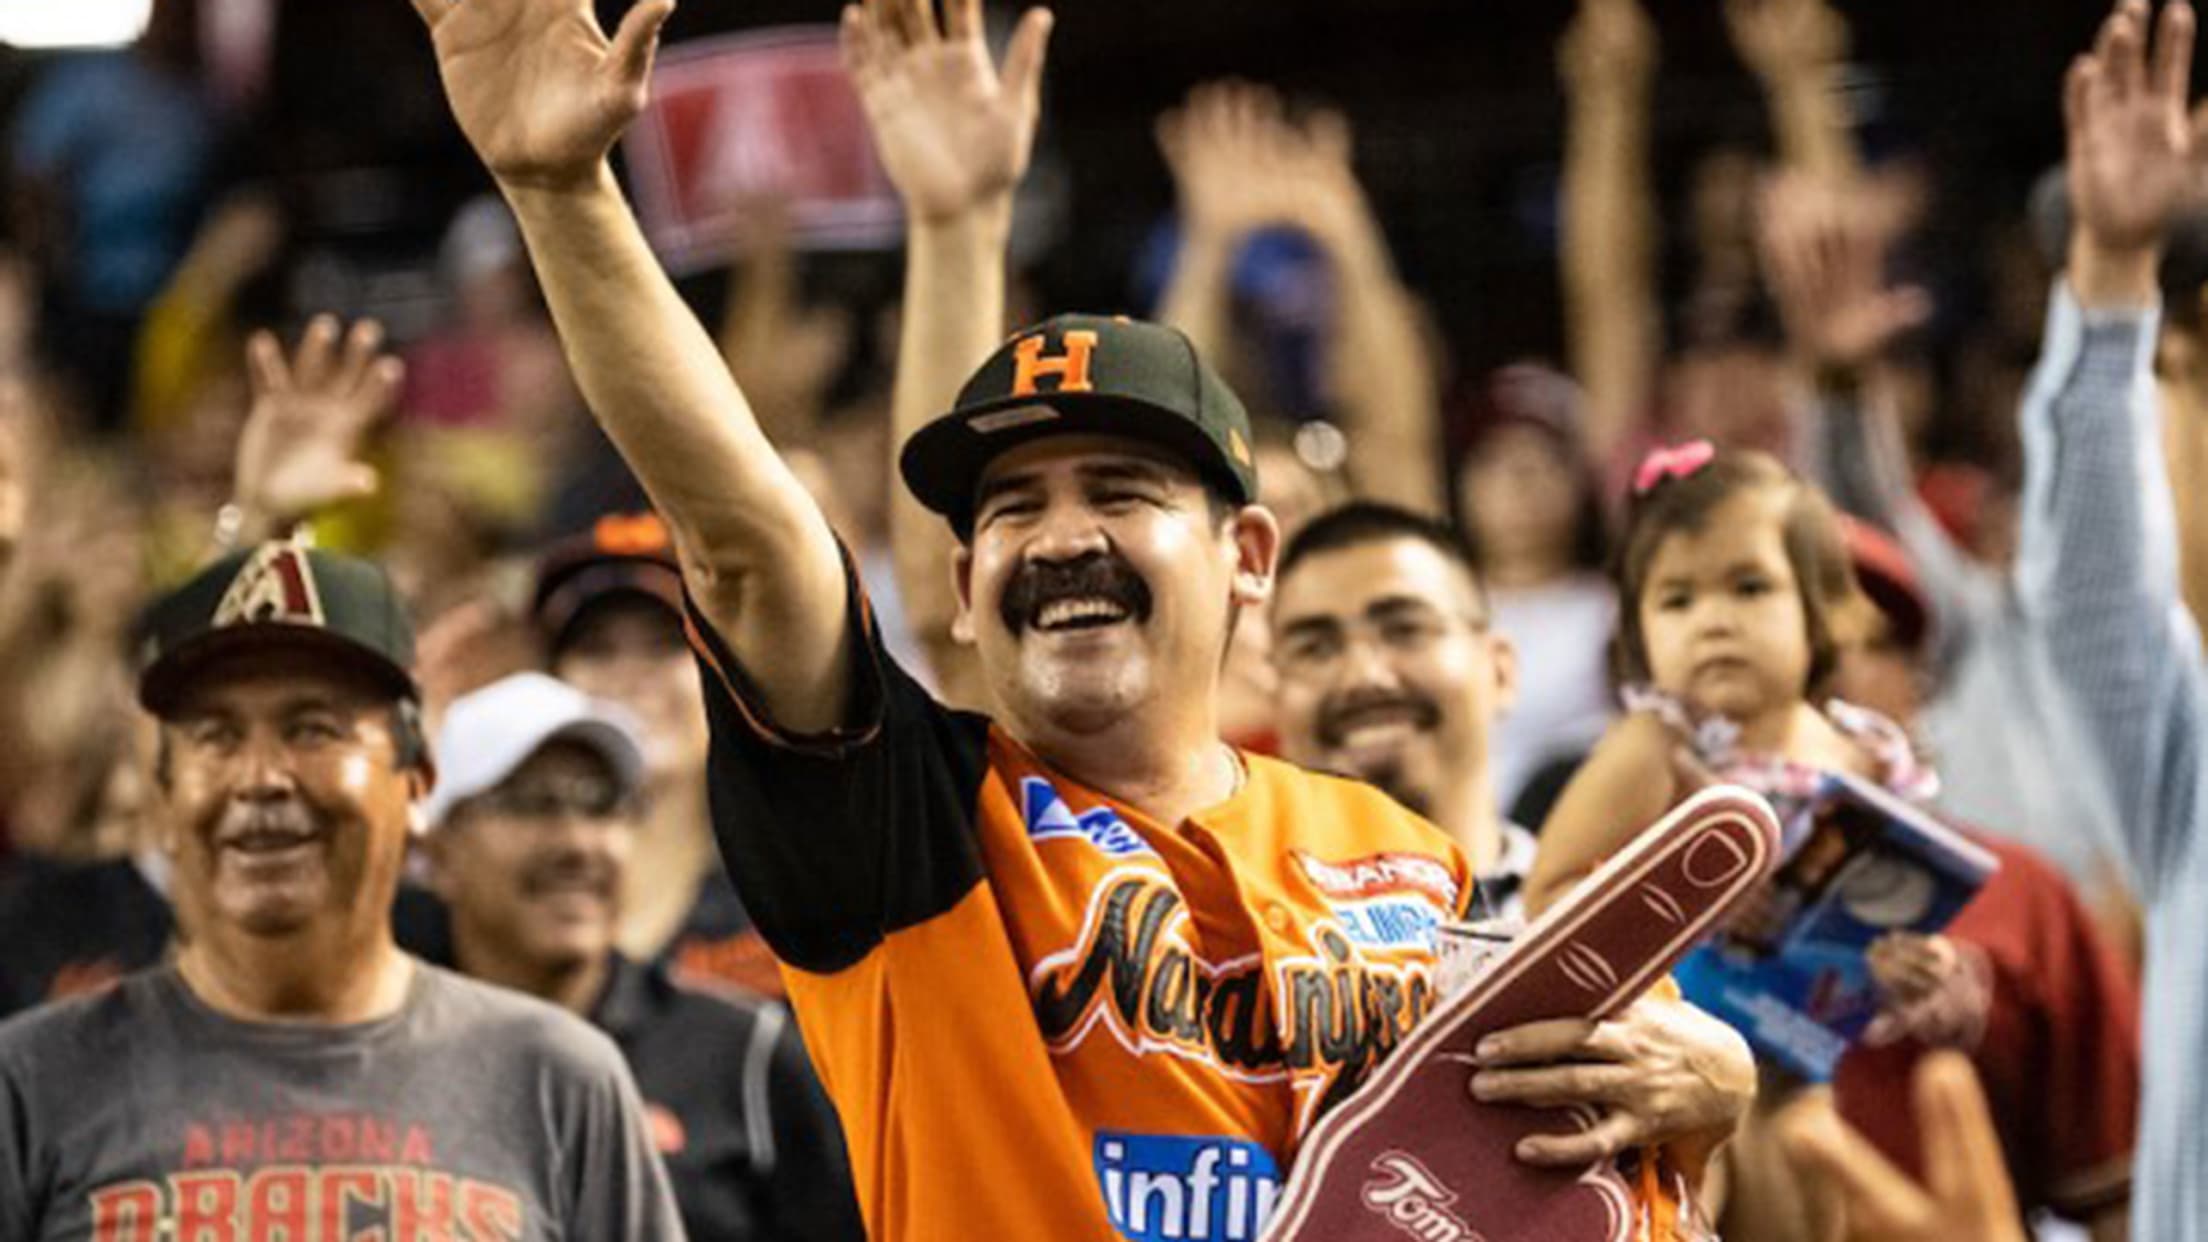 D-backs outfielder embraces his Hispanic roots